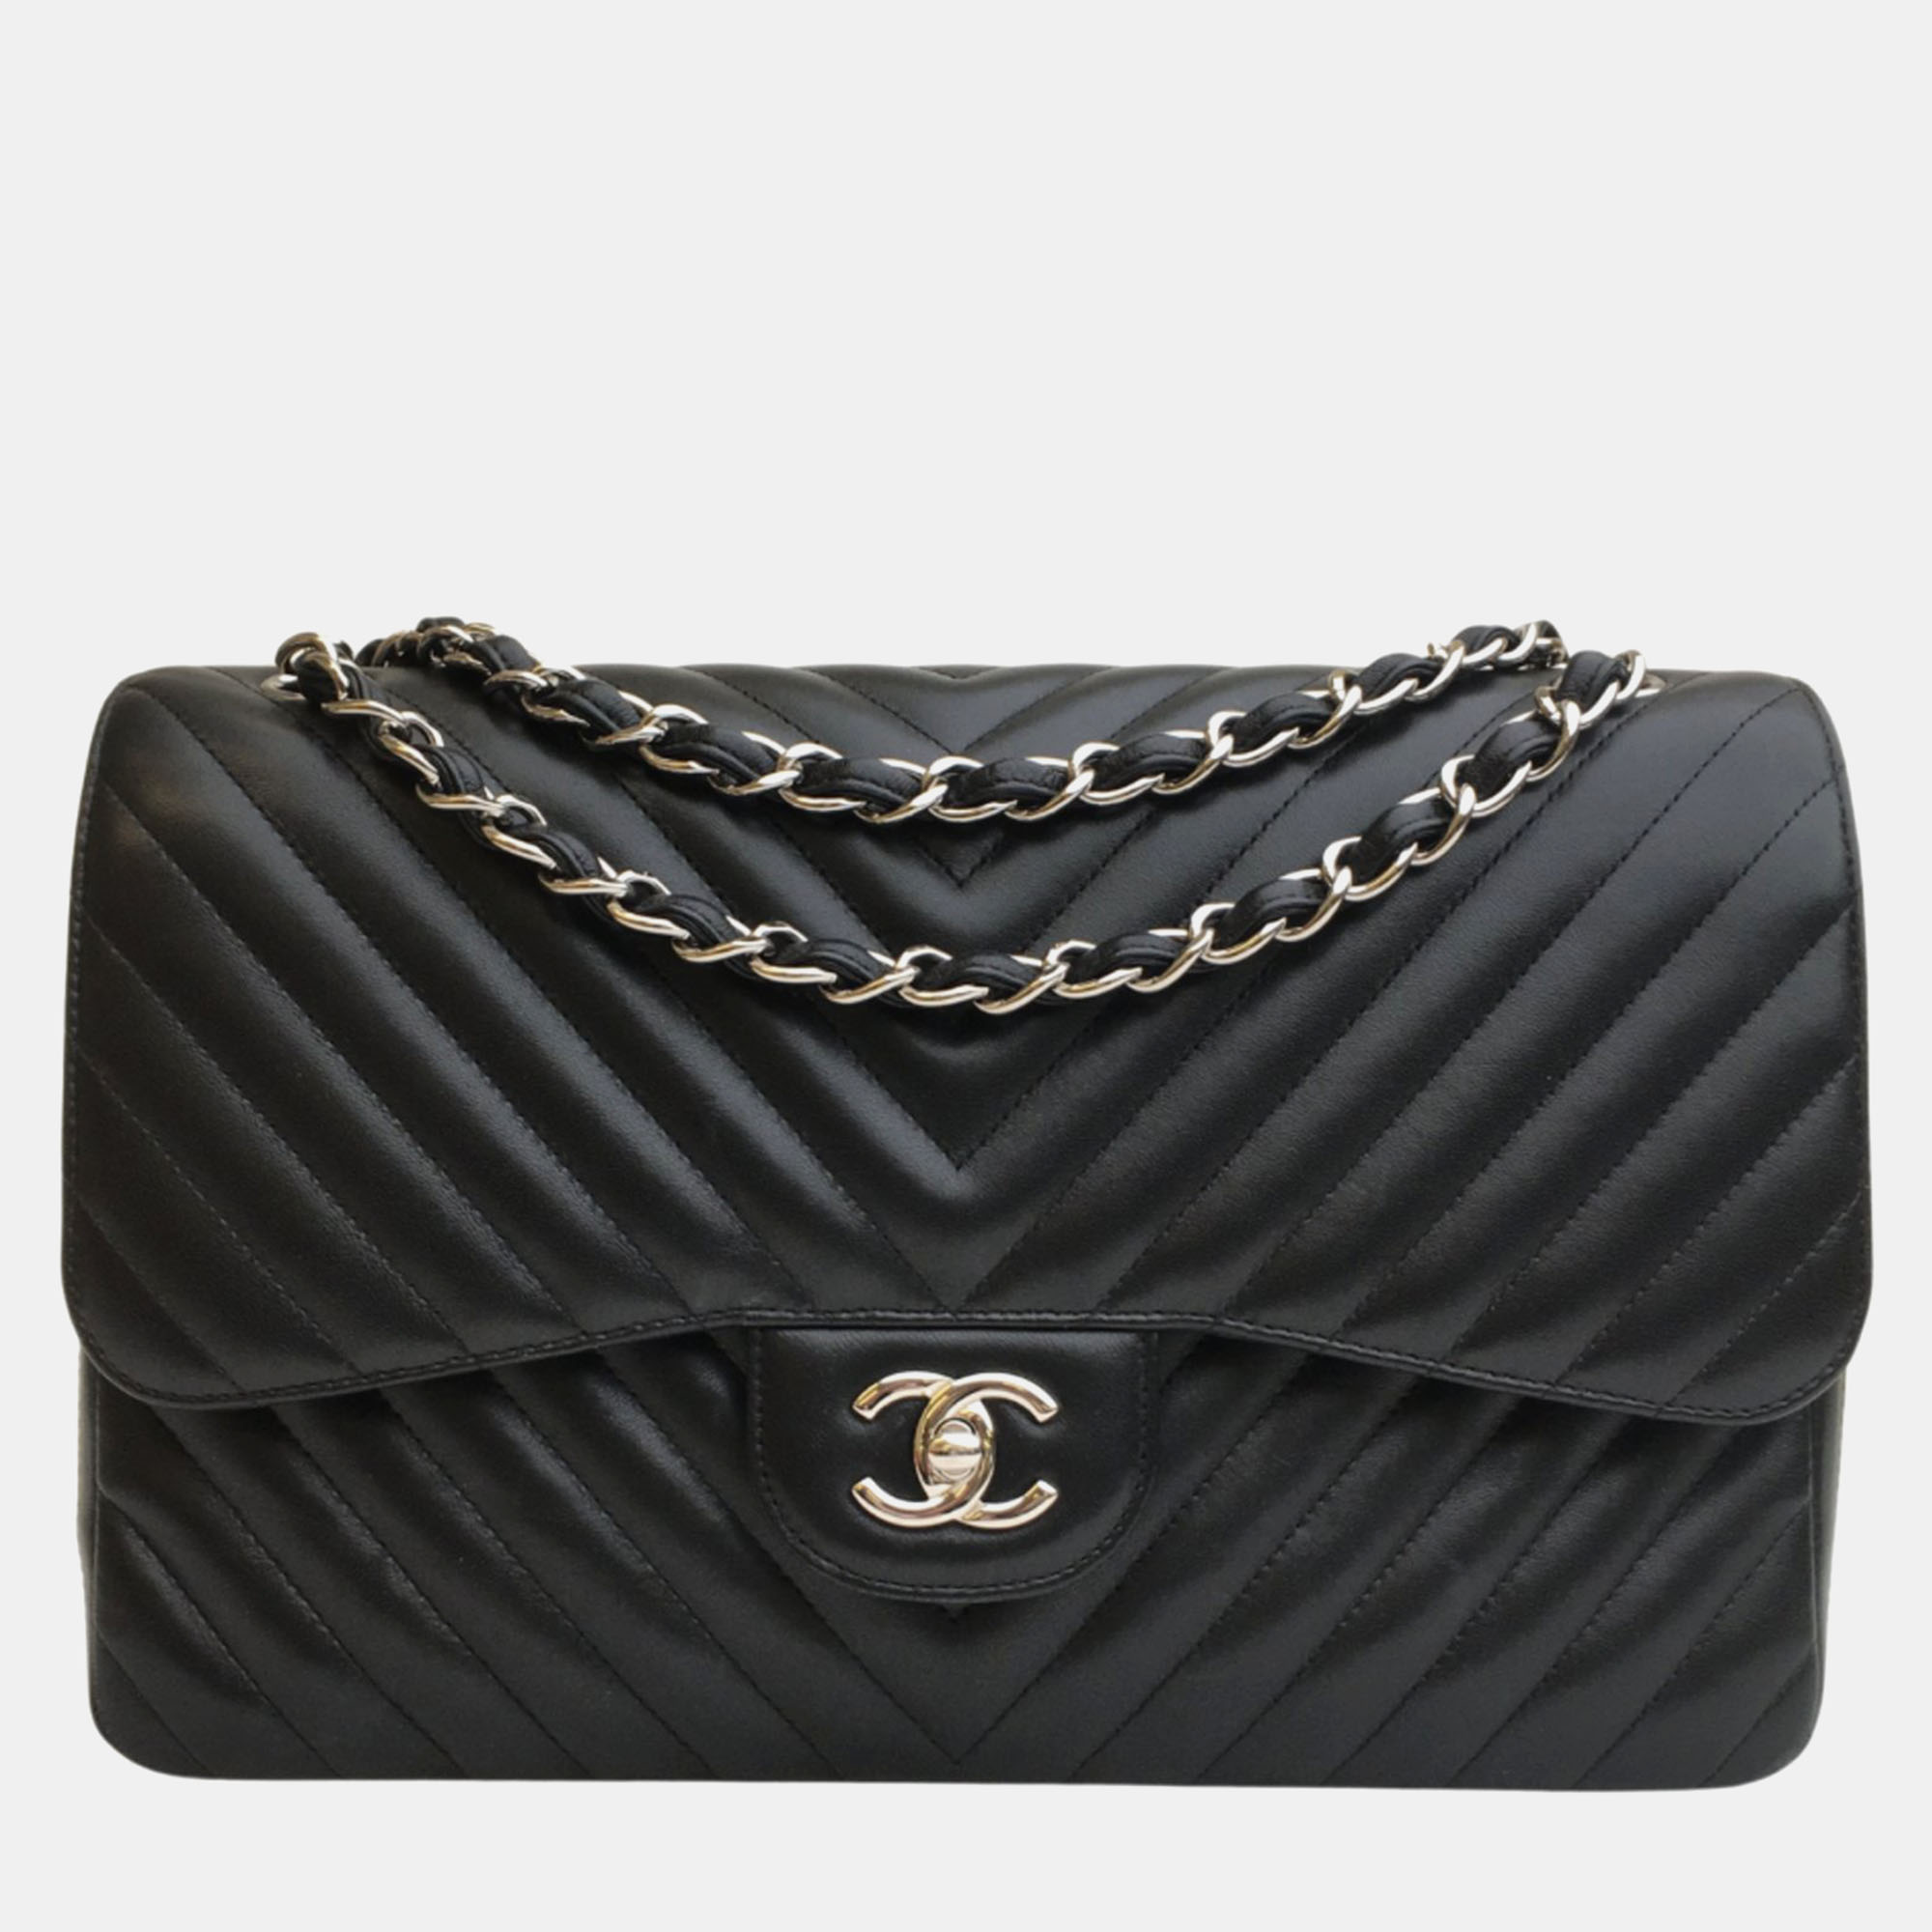 Chanel black leather chevron jumbo classic double flap shoulder bag